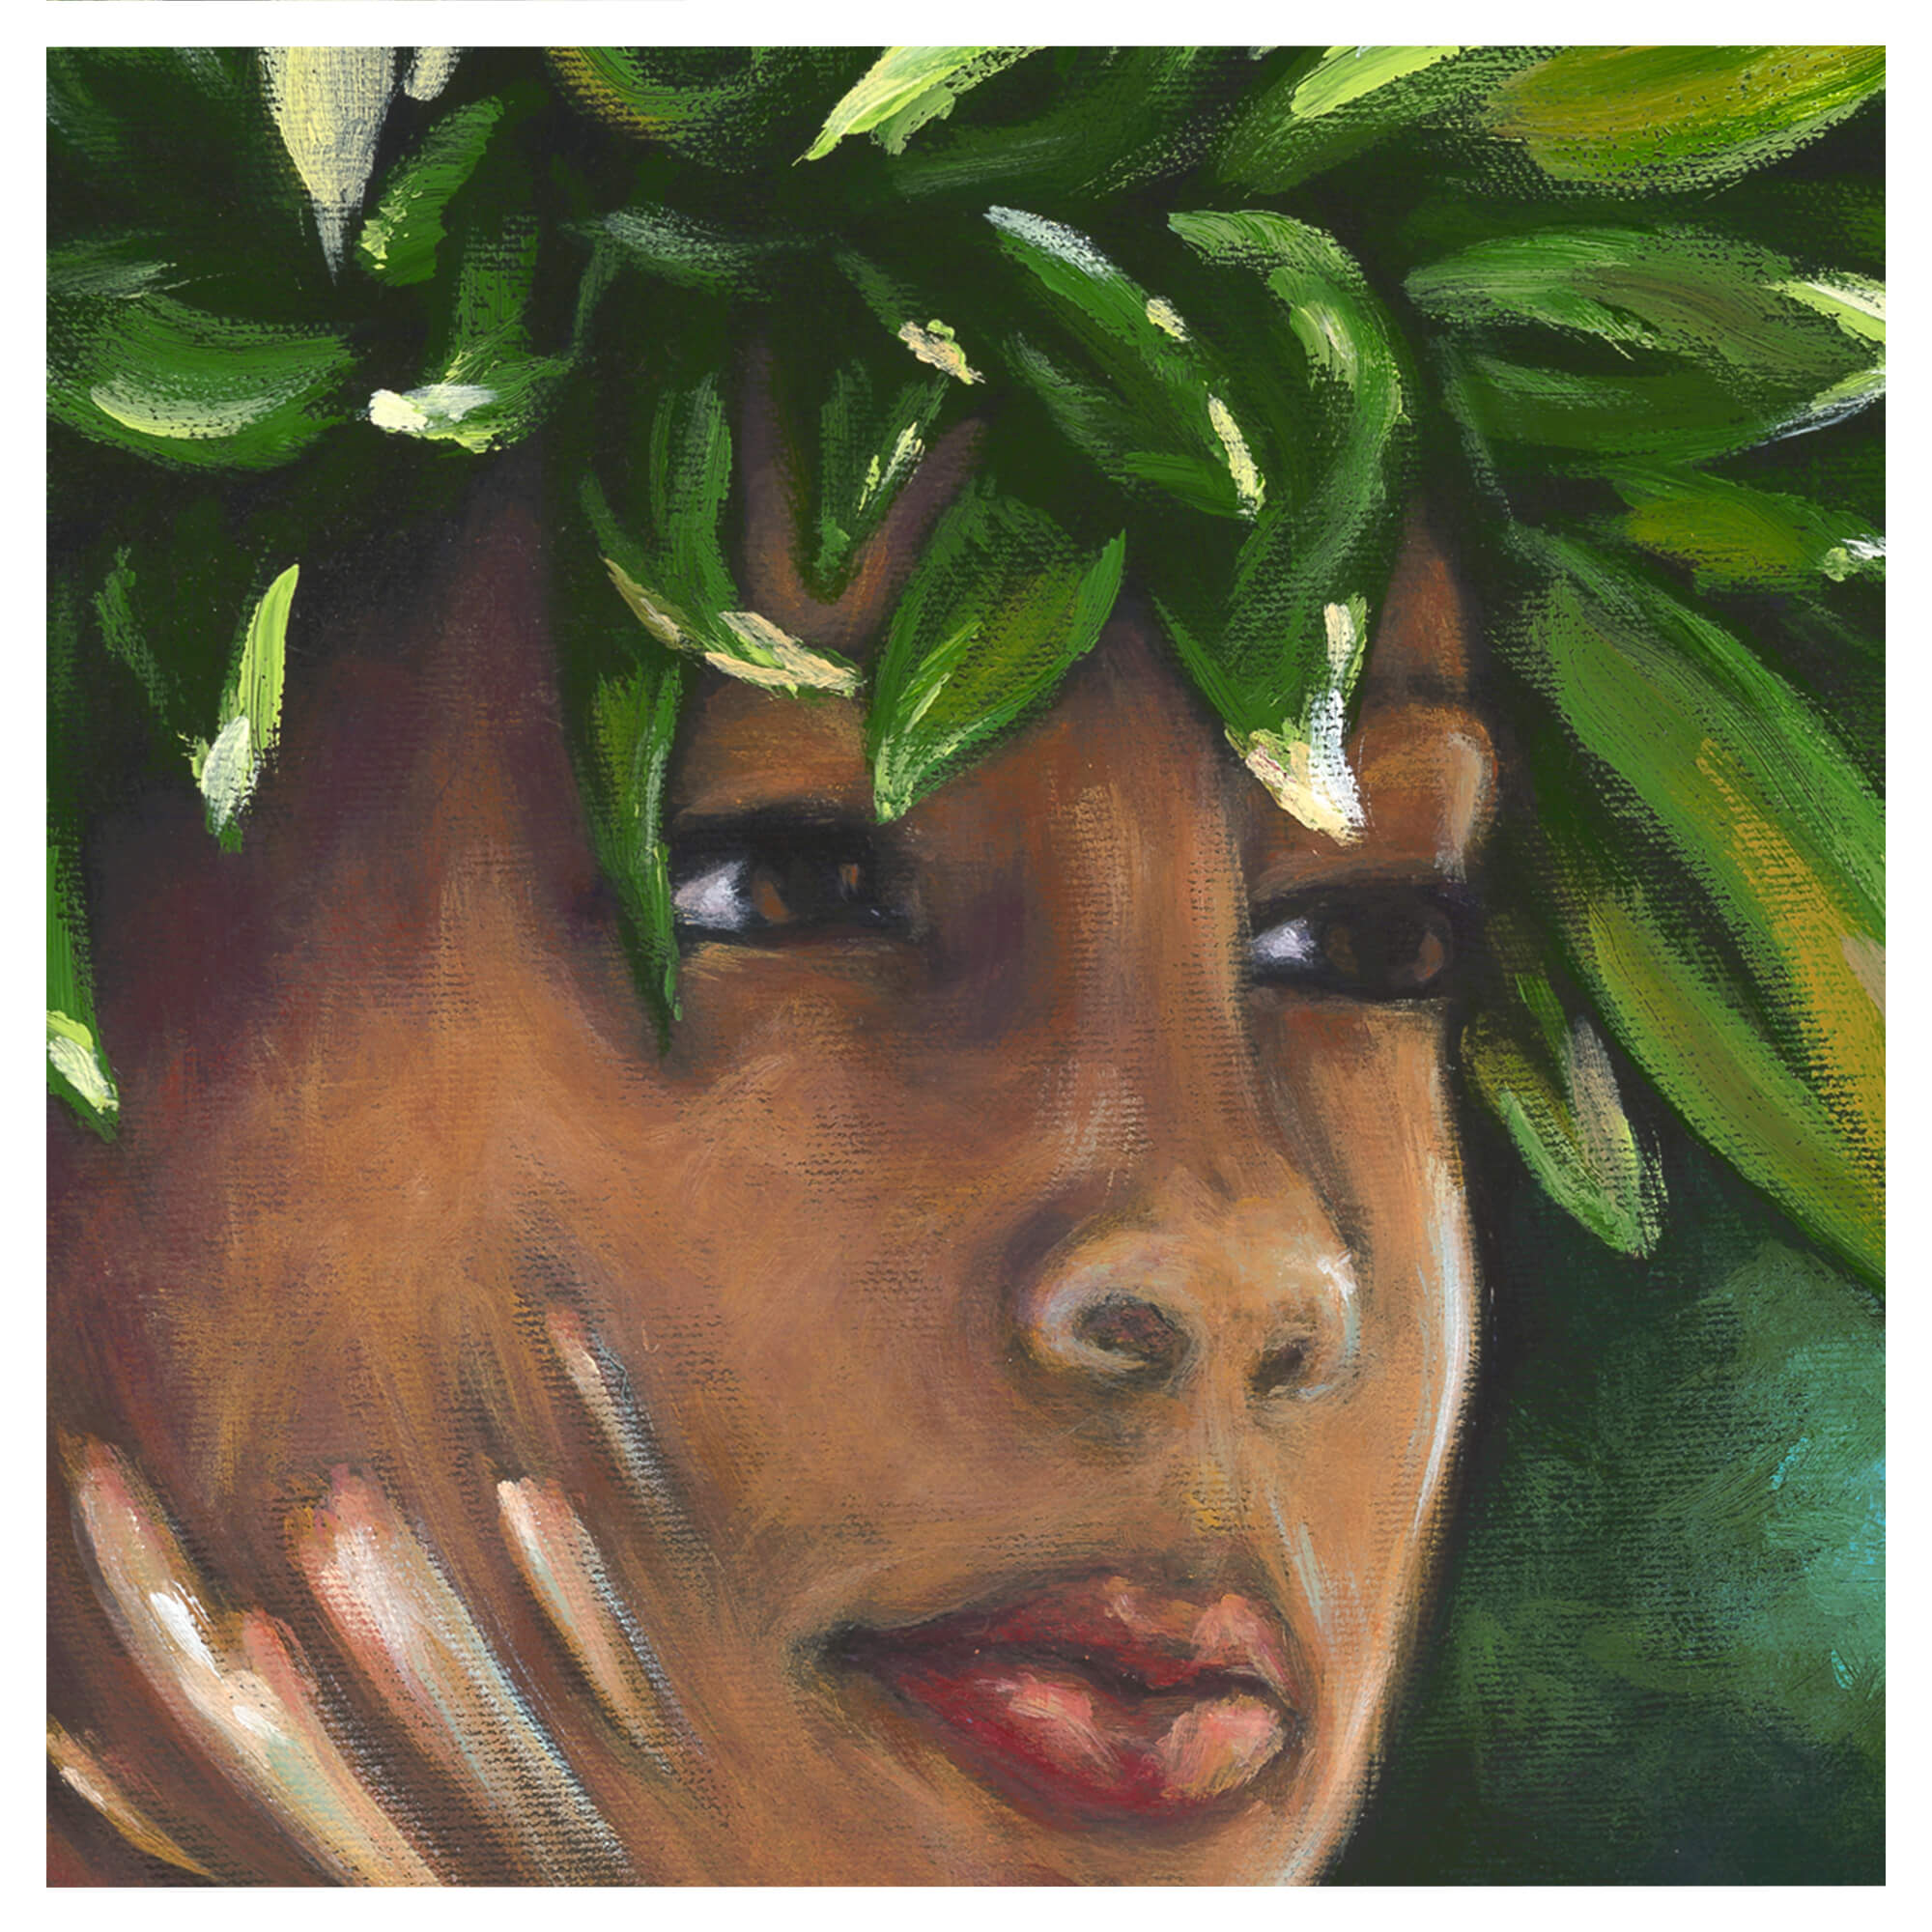 An illustration featuring a woman by hawaii artist Kristi Petosa